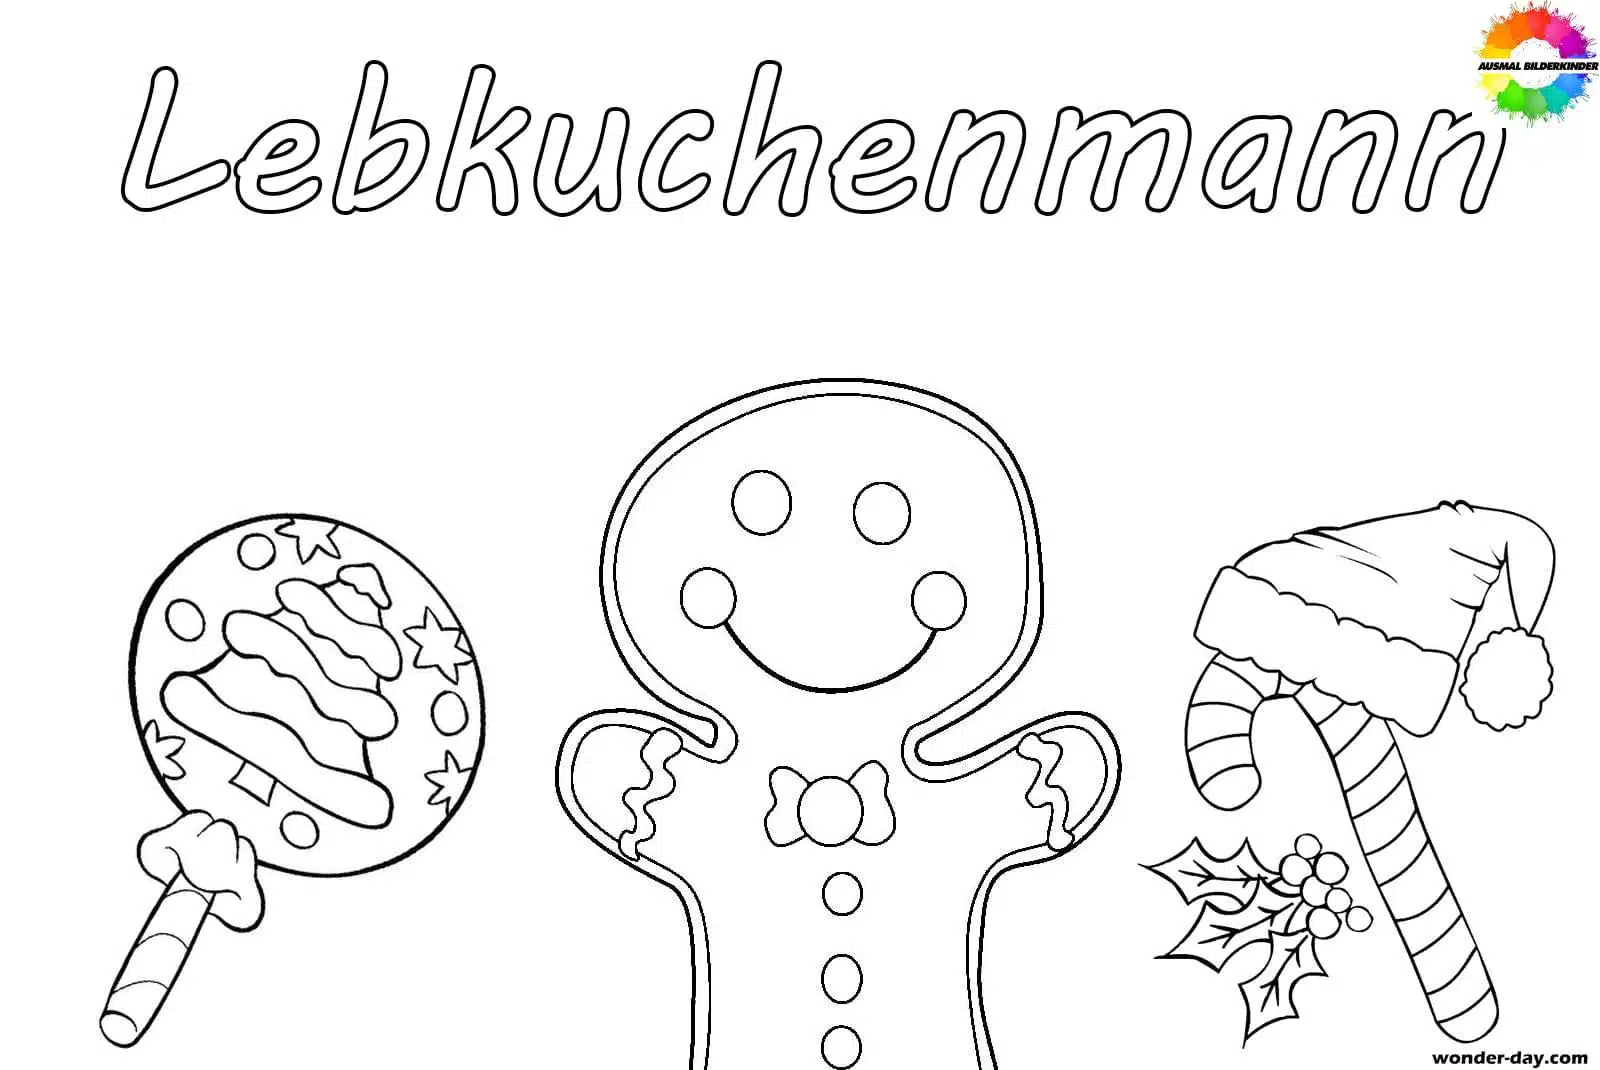 Lebkuchenmann 02